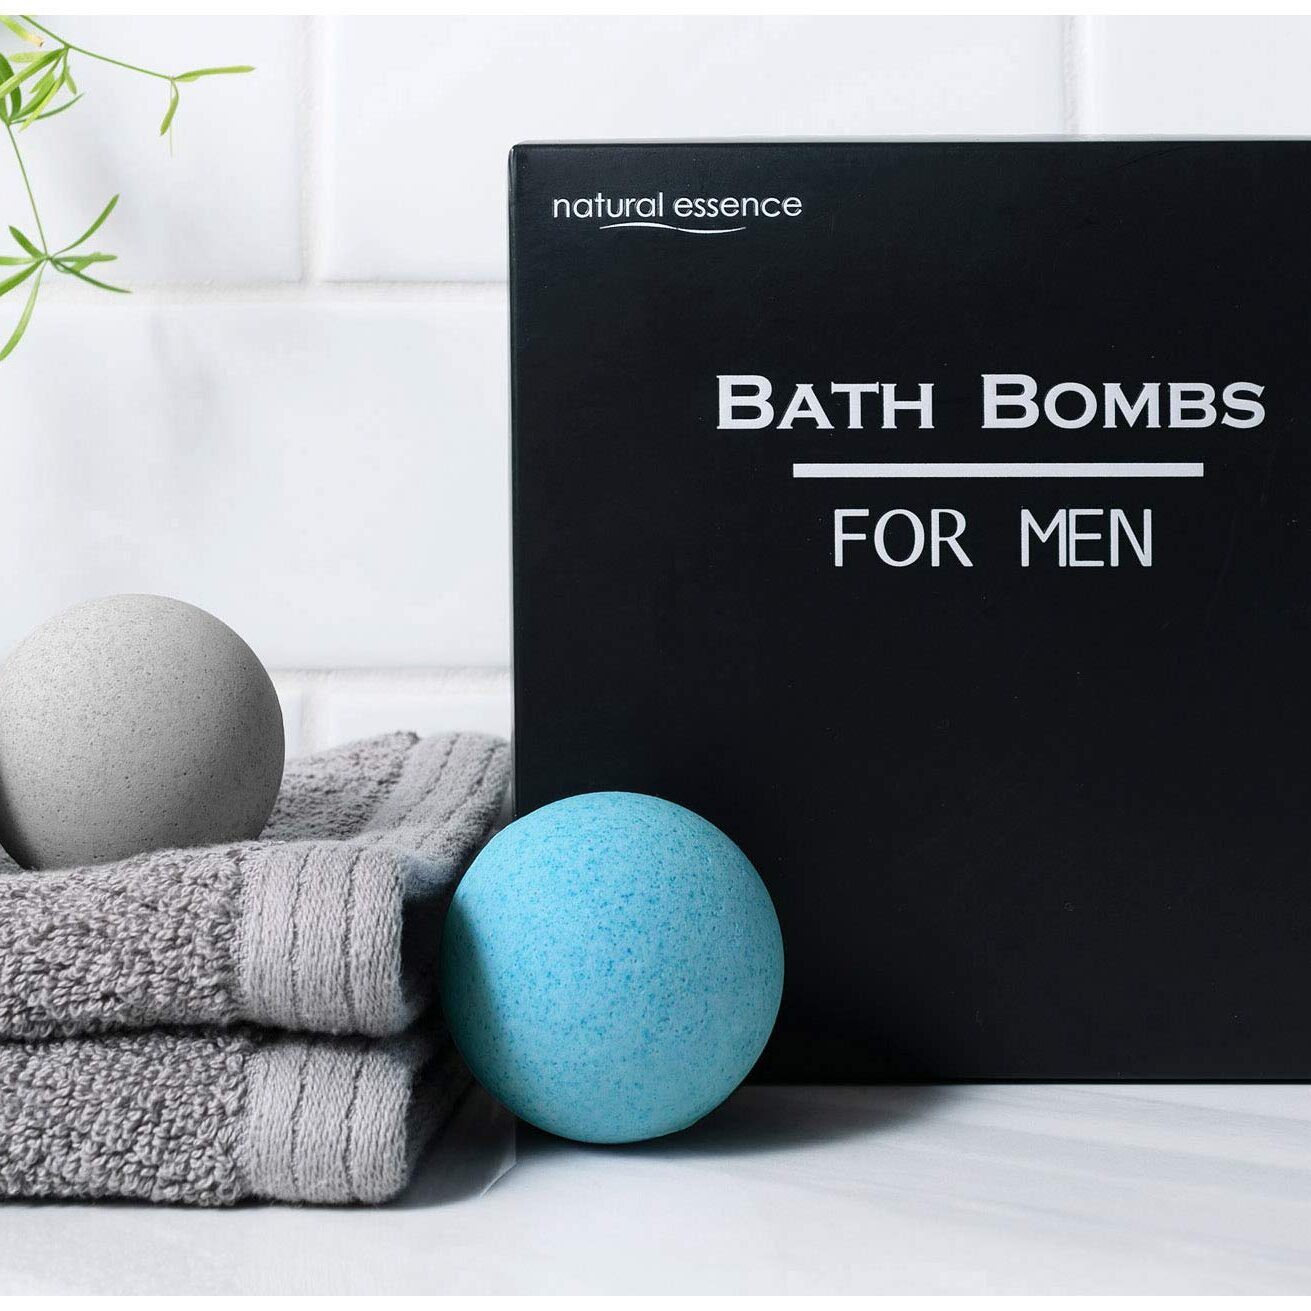 Bath Bombs Gift Set